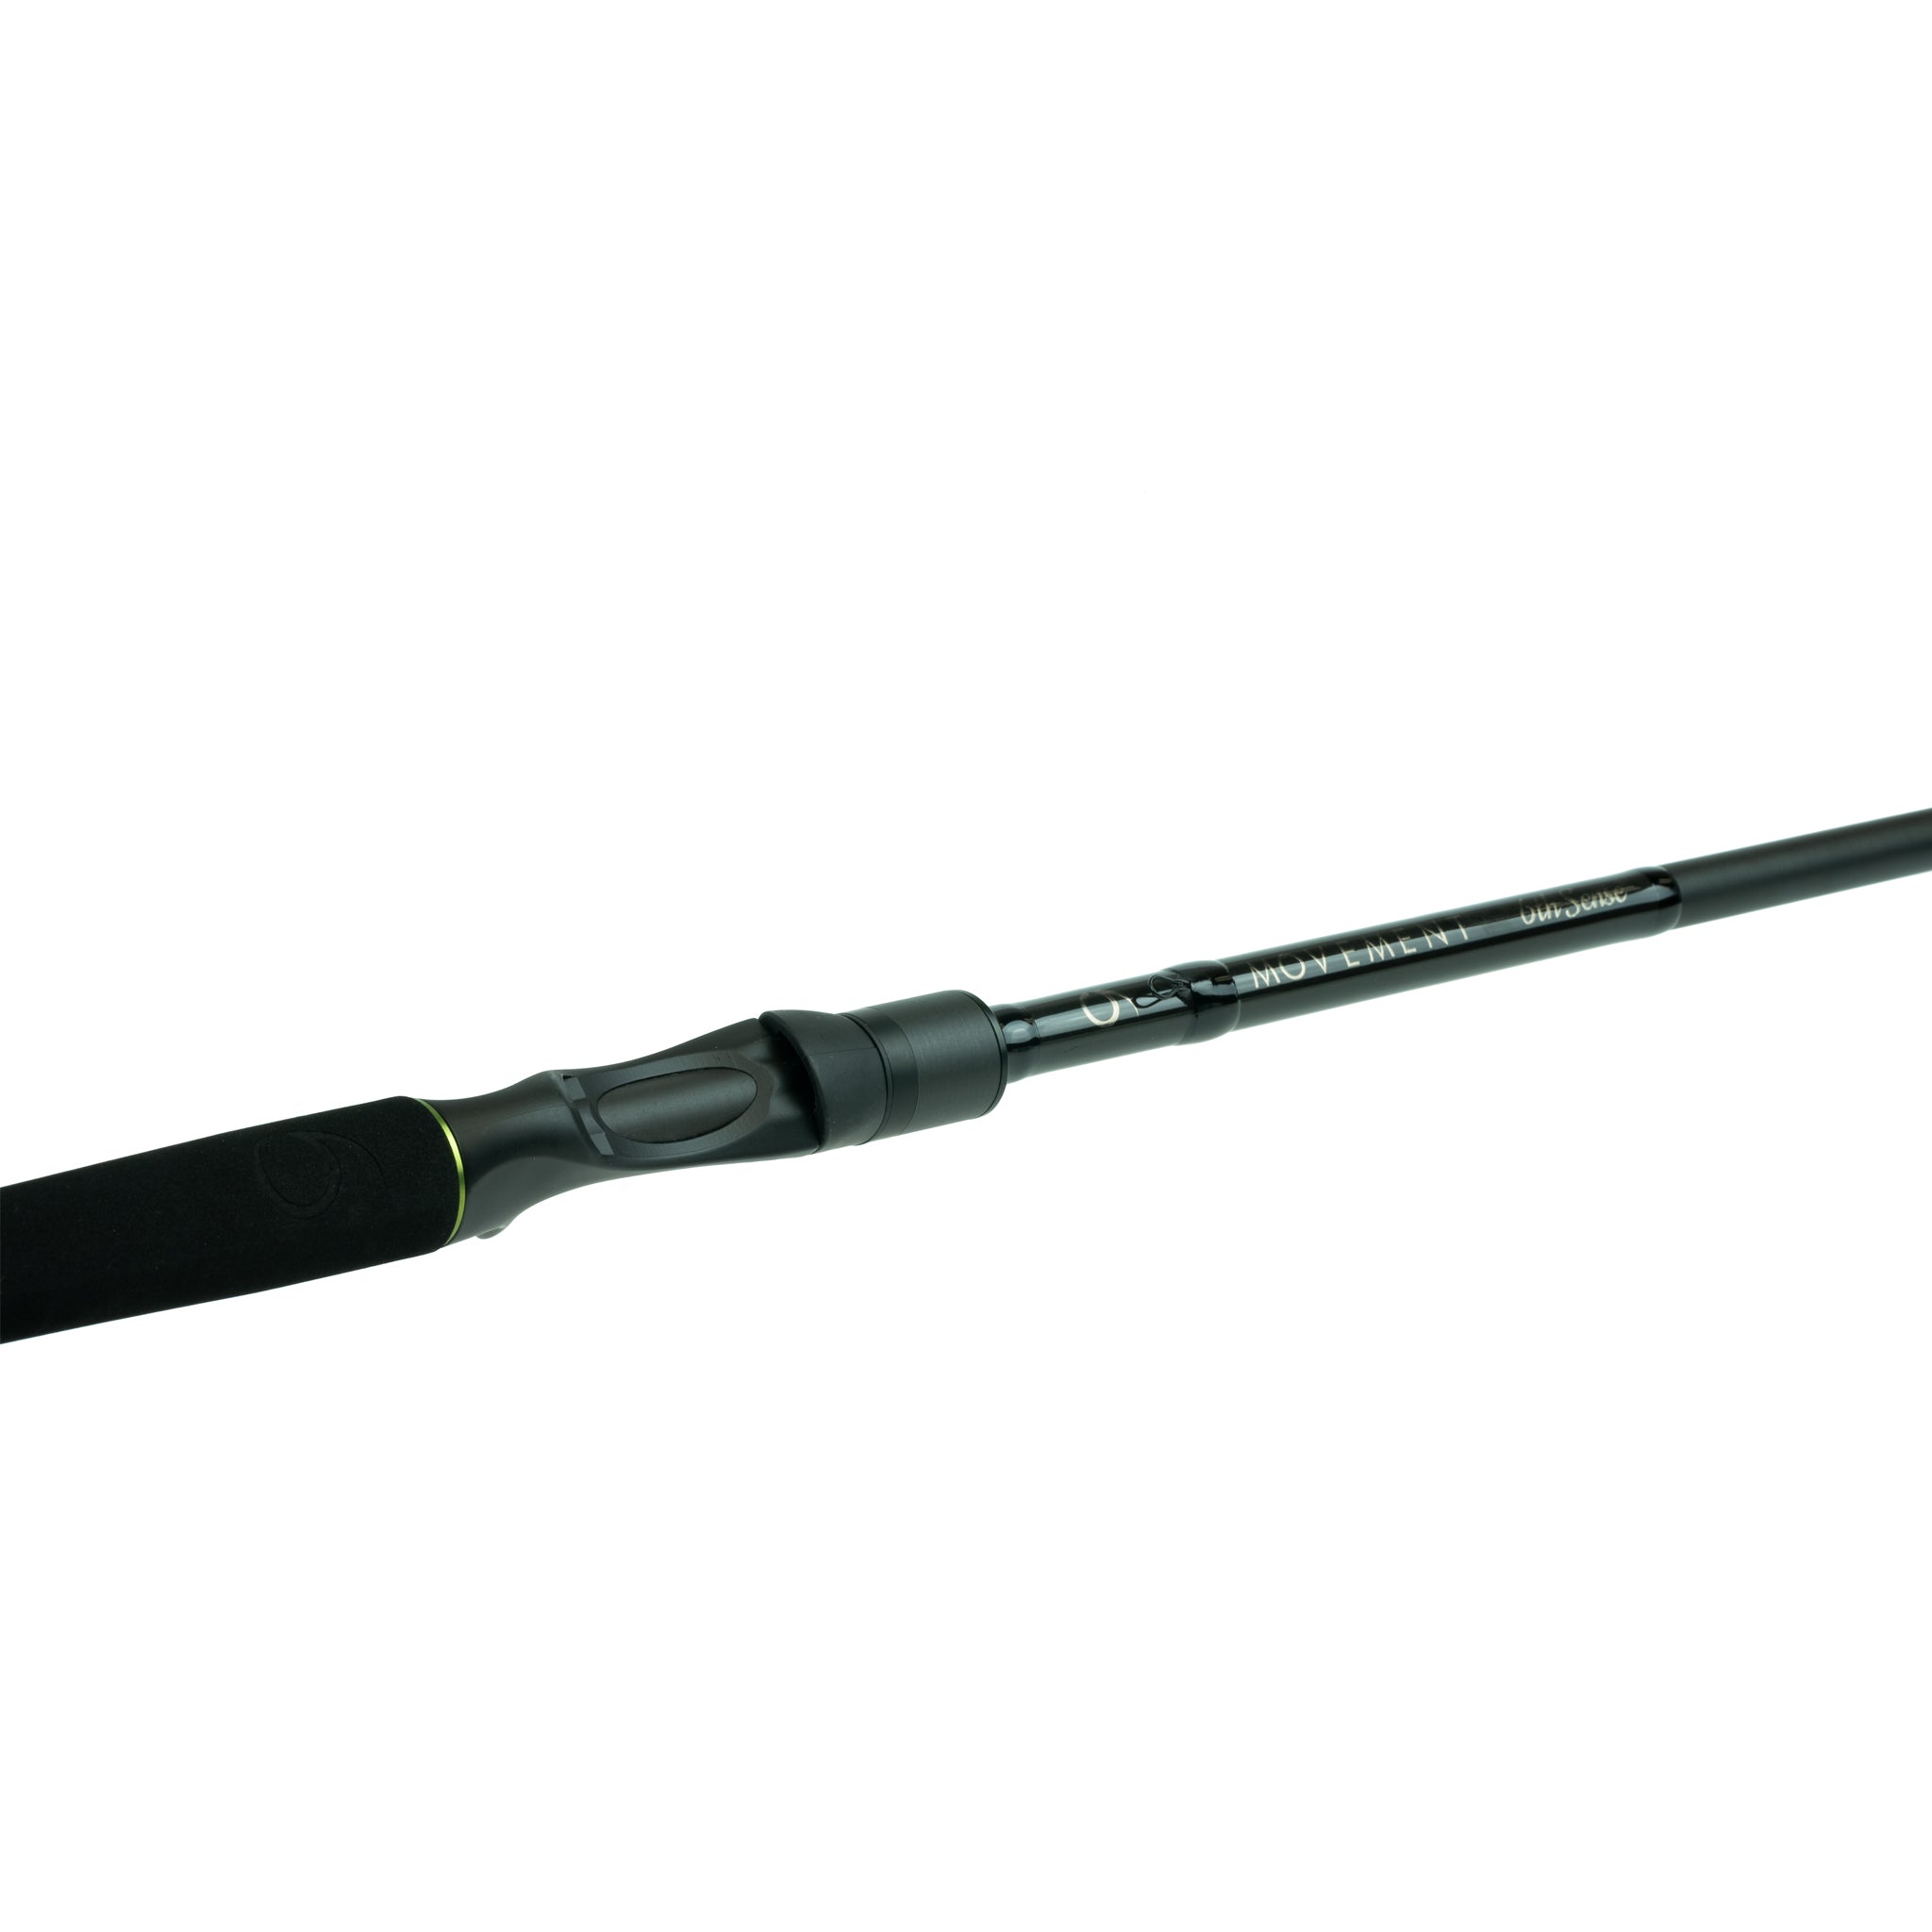 6th Sense Fishing Heater Series Rod - 7'5 Med, Moderate 